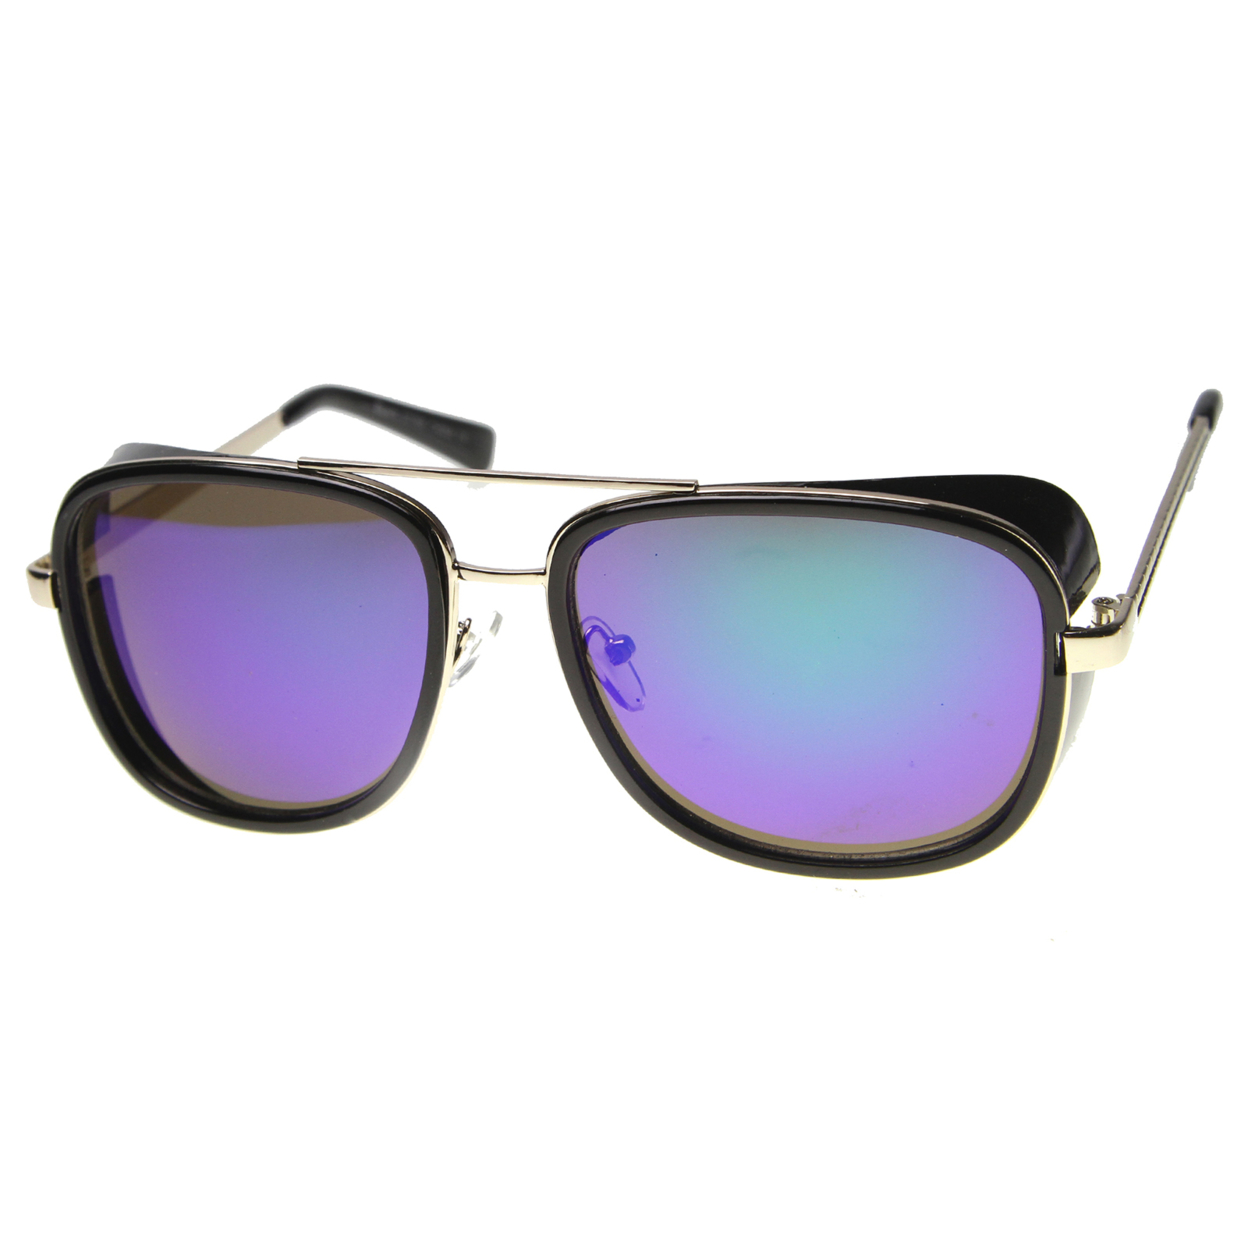 Unisex Aviator Sunglasses With UV400 Protected Mirrored Lens 9896 - Shiny Black-Gold / Midnight